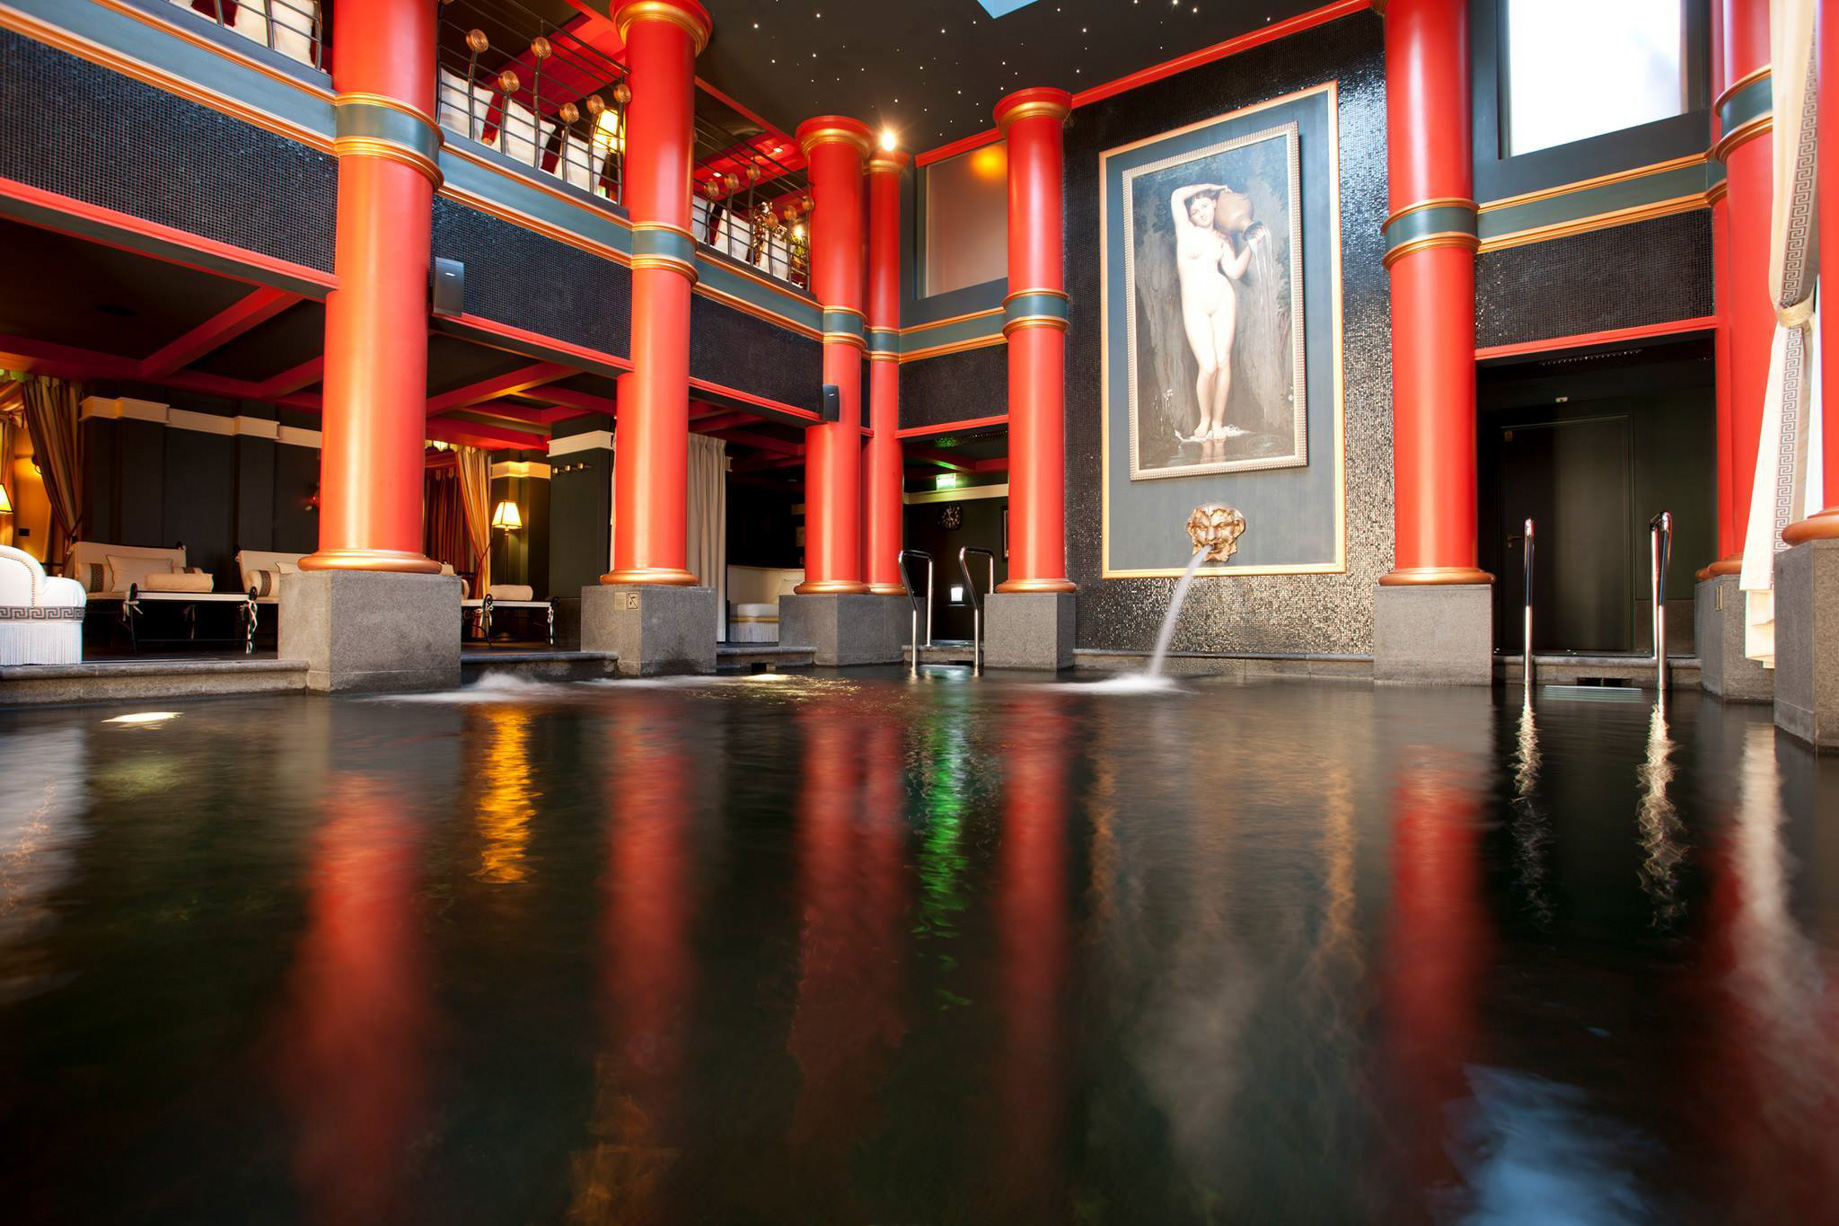 InterContinental Bordeaux Le Grand Hotel – Bordeaux, France – Spa Guerlain Relaxation Pool